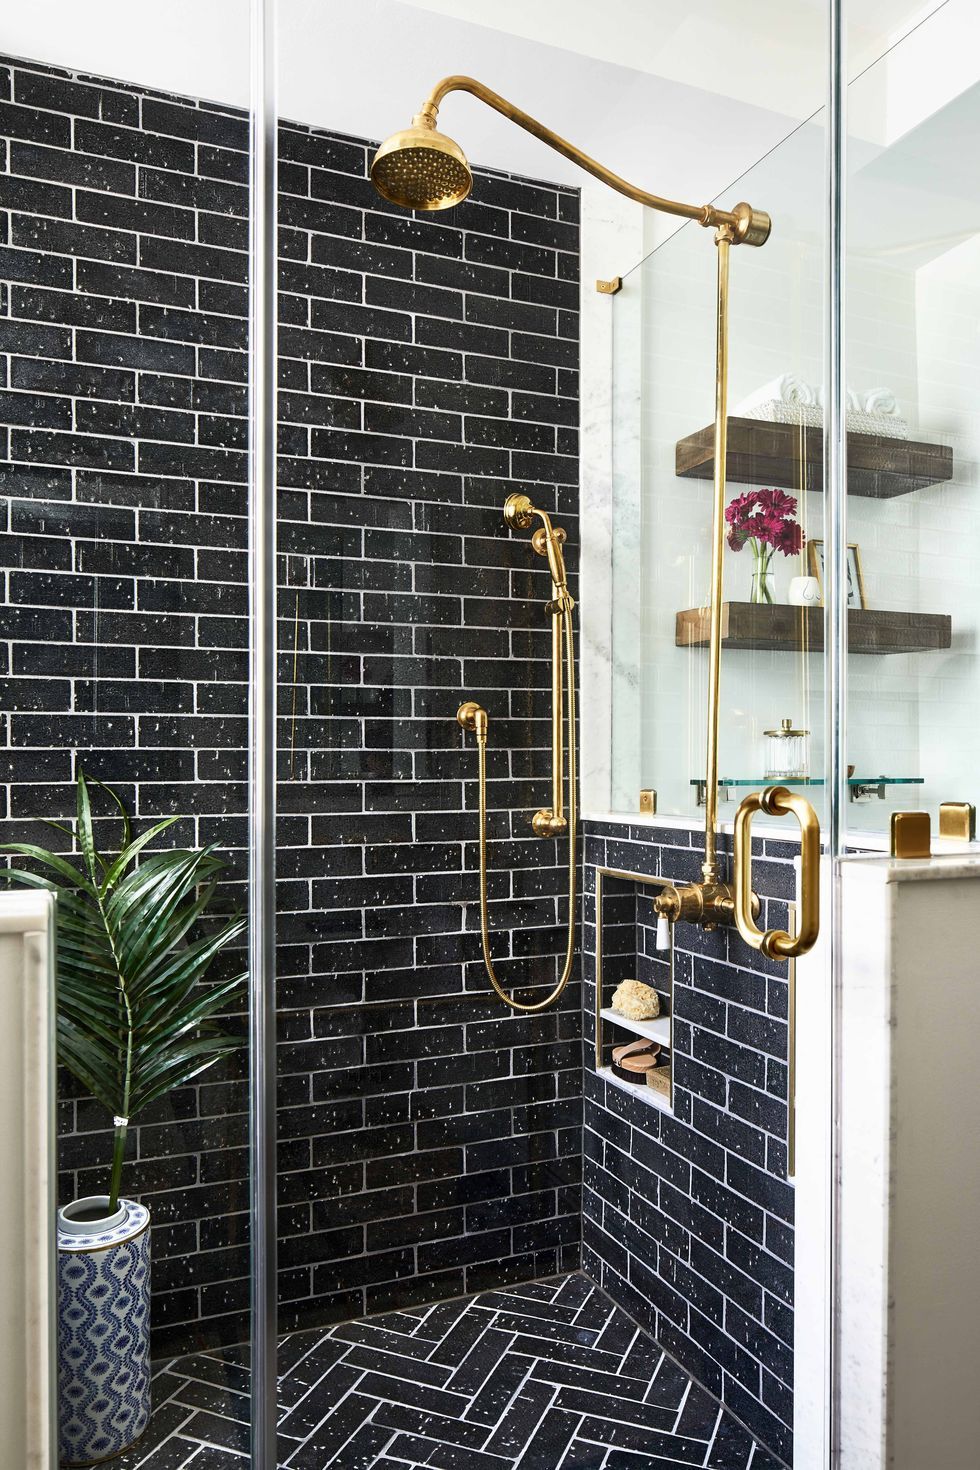 Creative Bathroom Tile Design Ideas, Bathroom Tile Designs Gallery